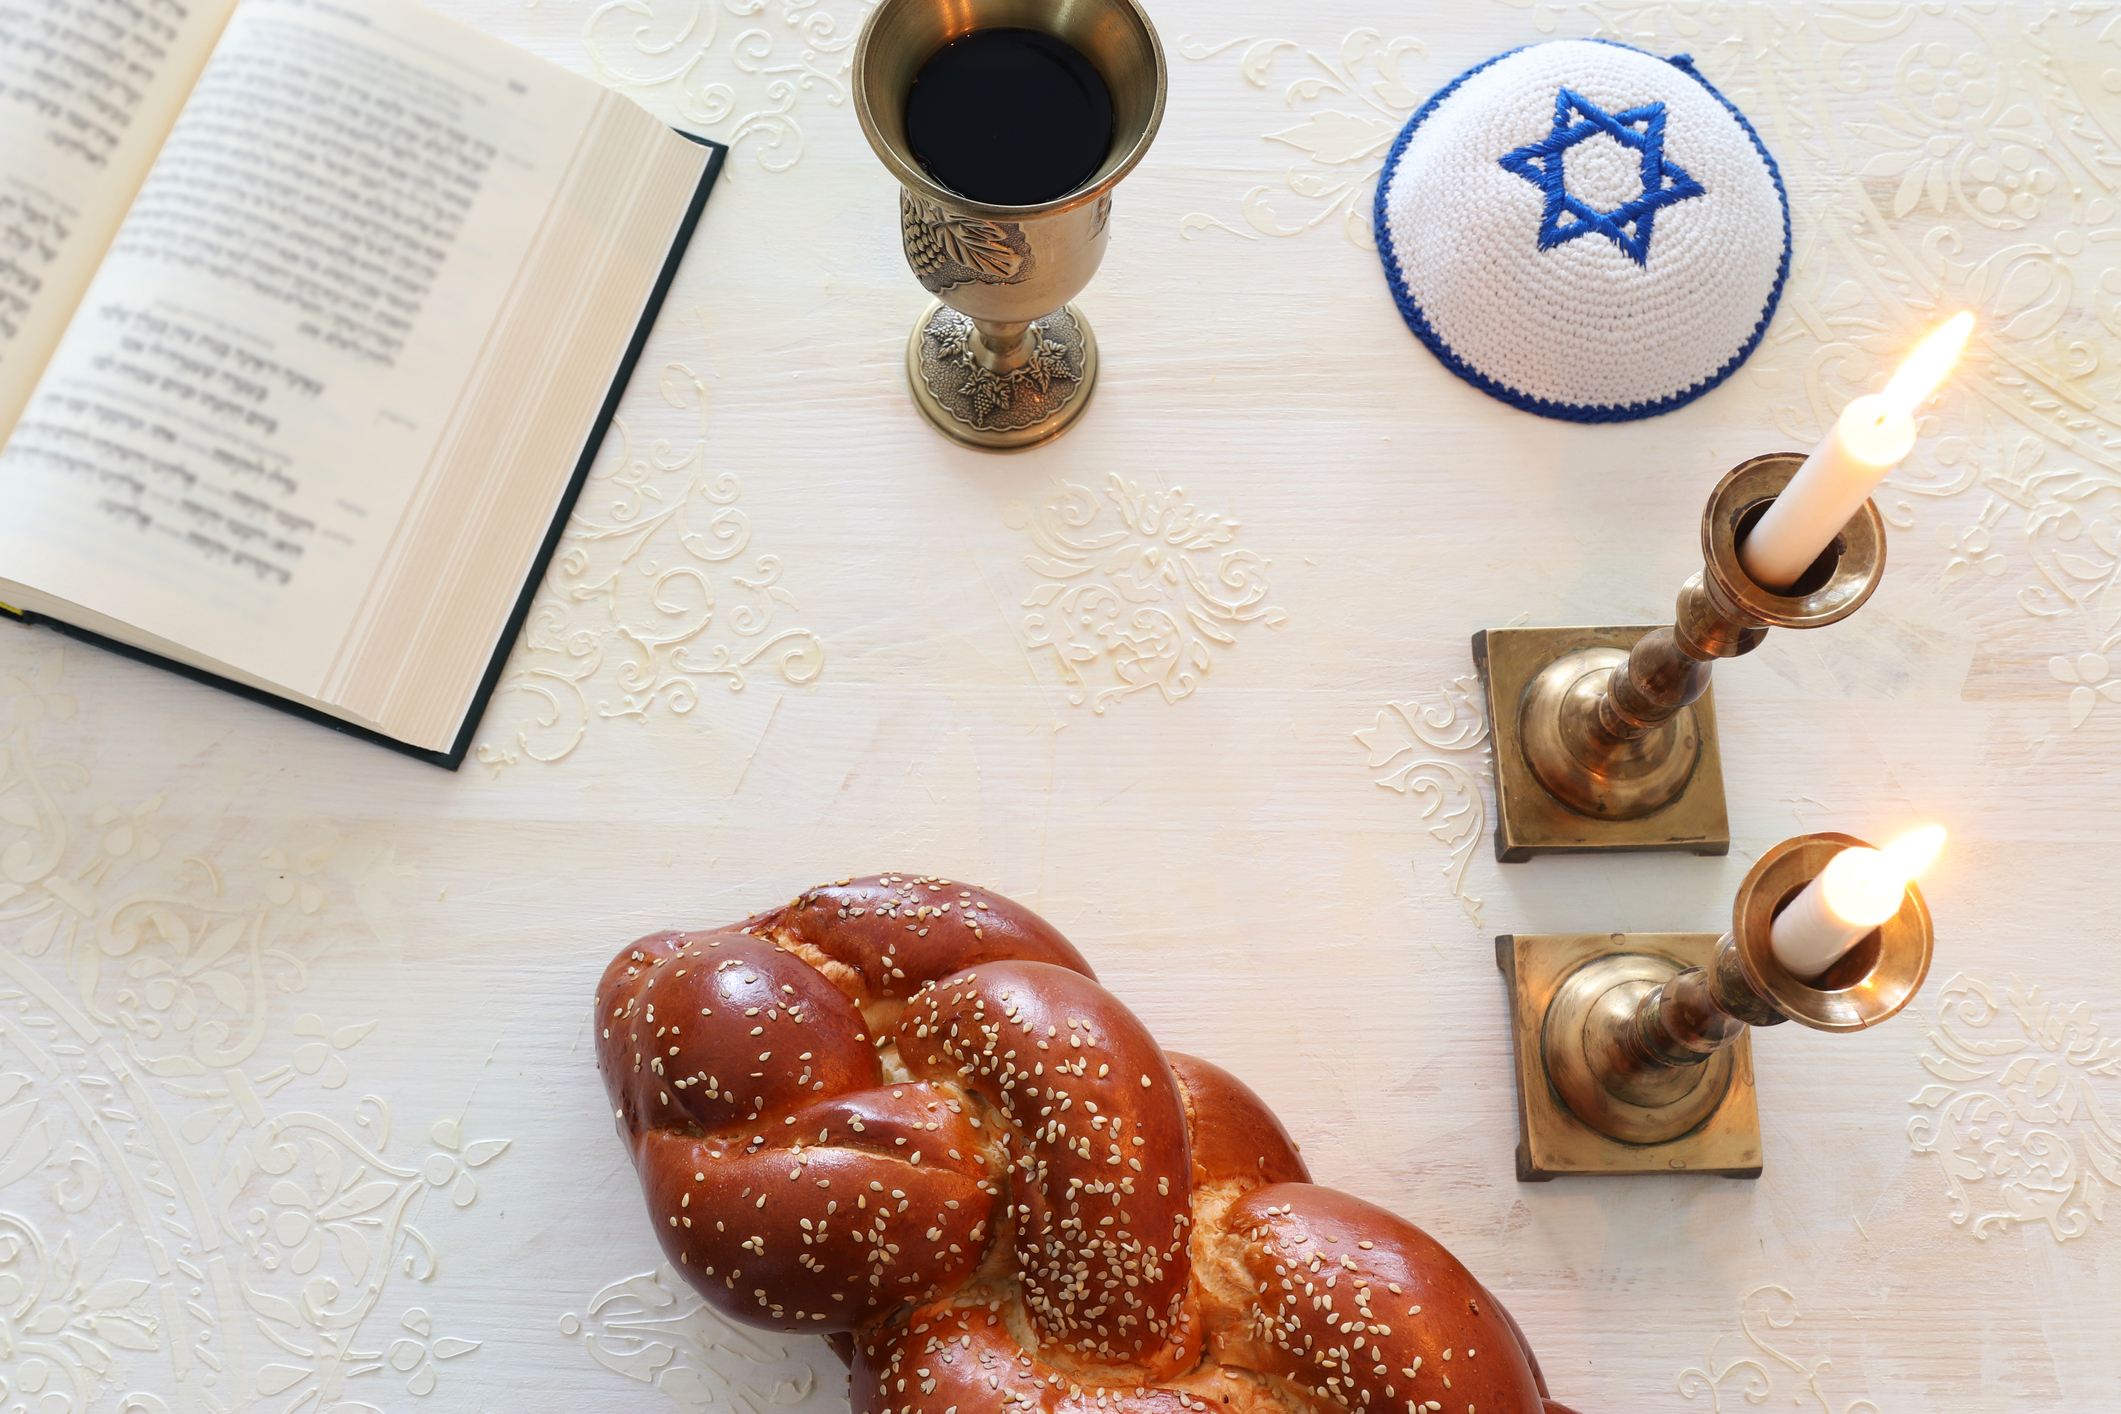 Et jødisk måltid med mat, toraen, vin, lys og en kipa med davidsstjernen på. Symboliserer sabbaten.